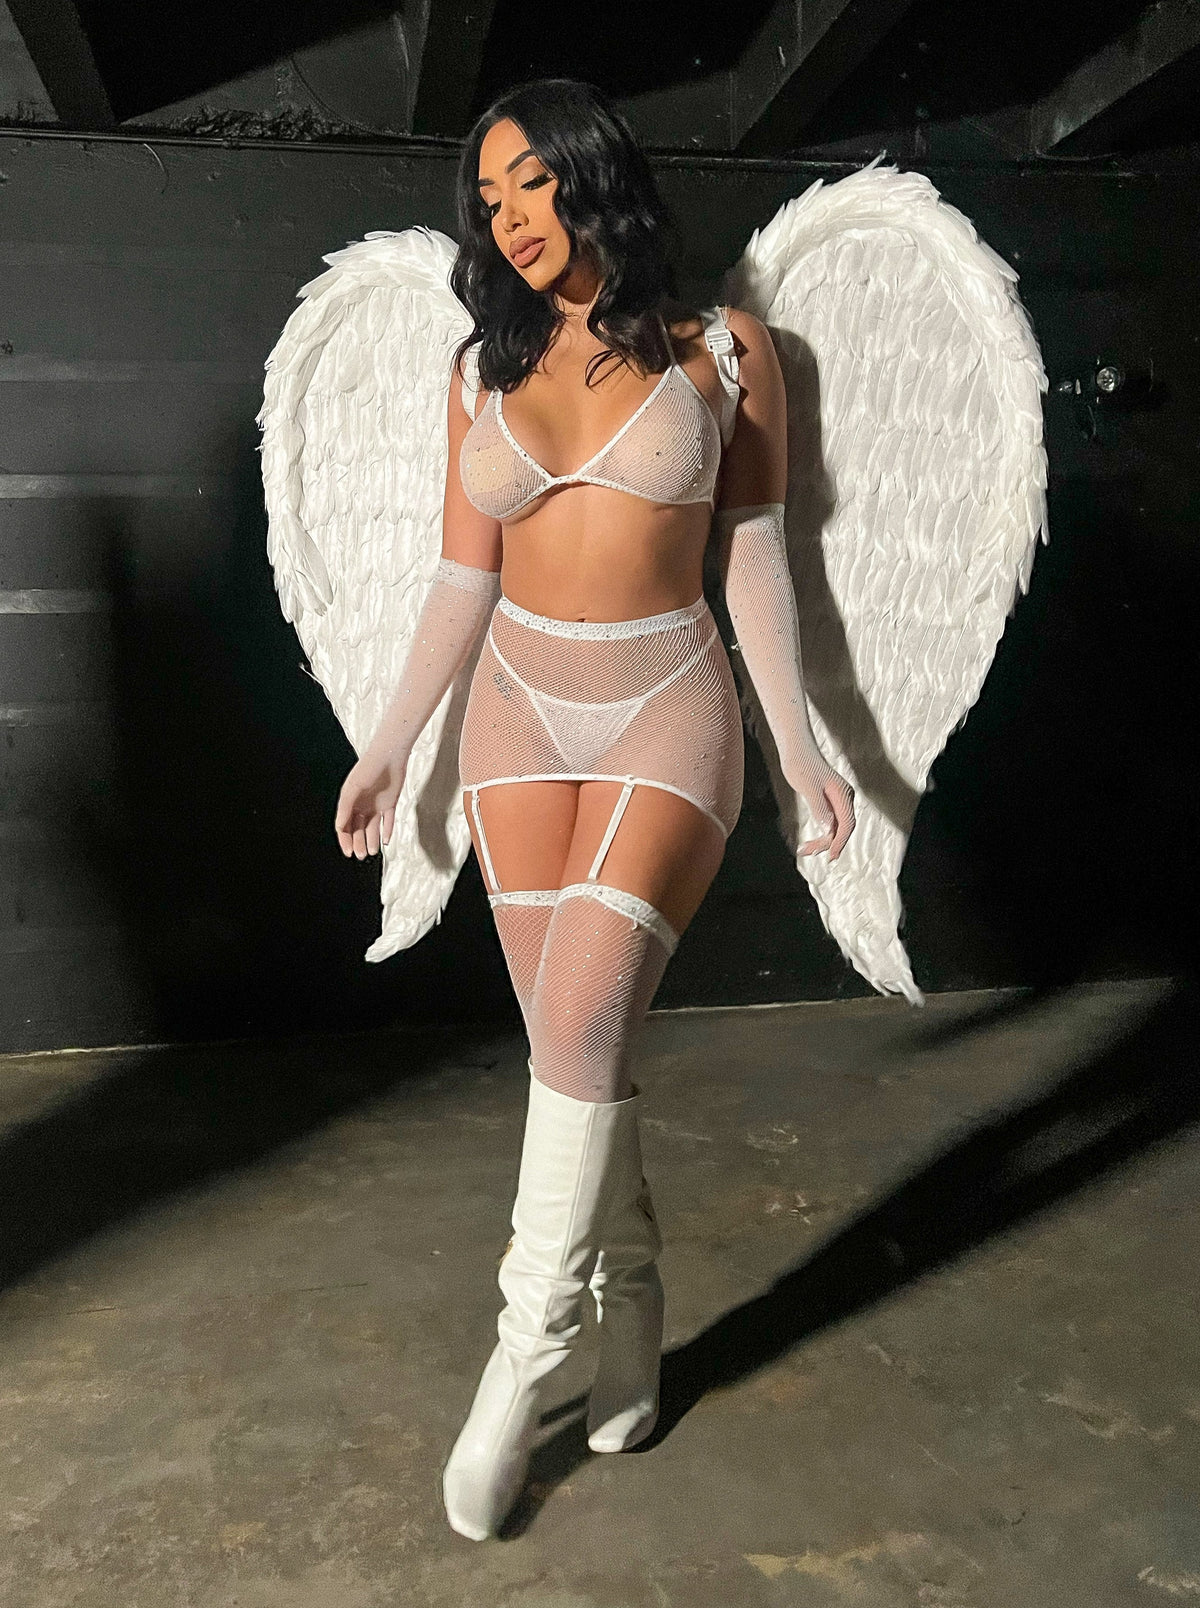 Harper Angel Wings (White)